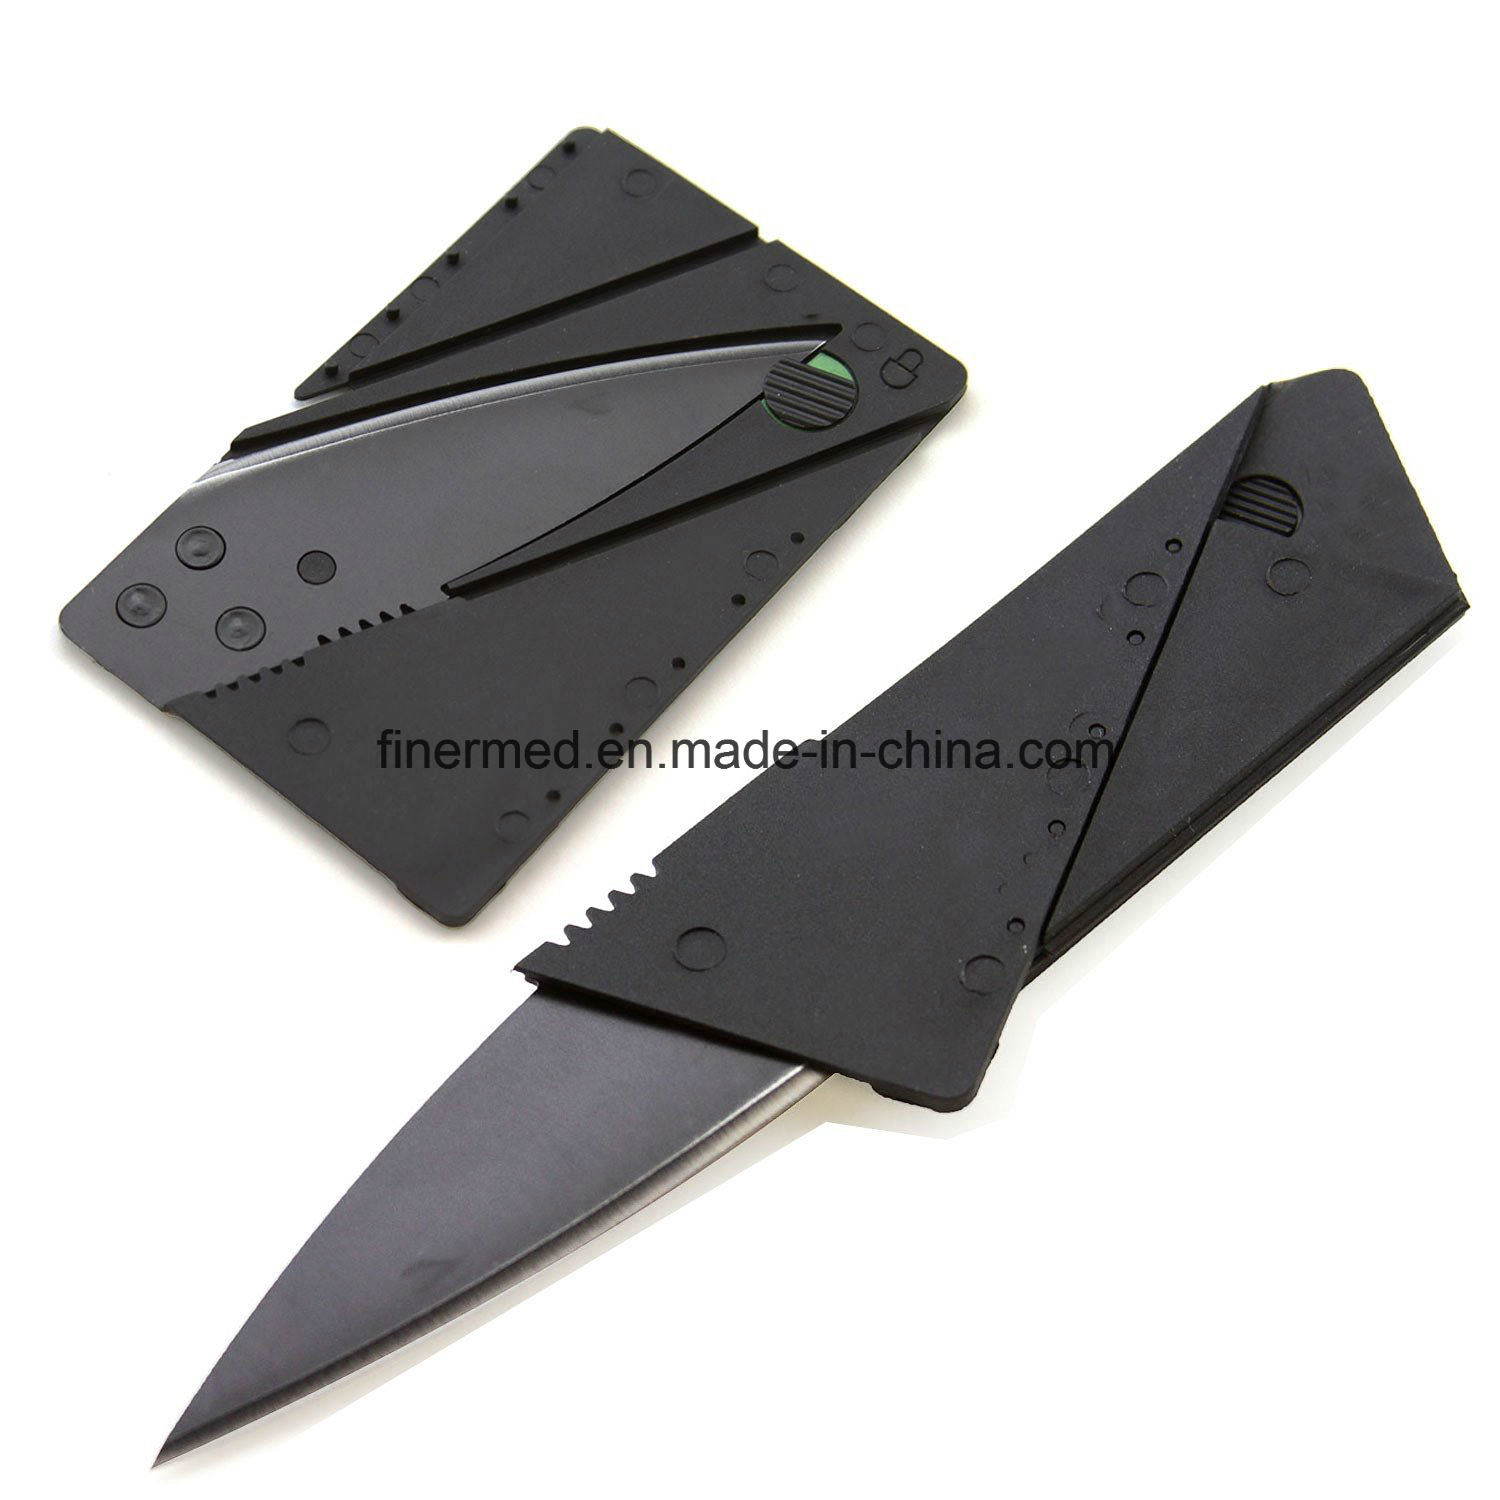 Mini Folding Cardsharp Credit Card Knife